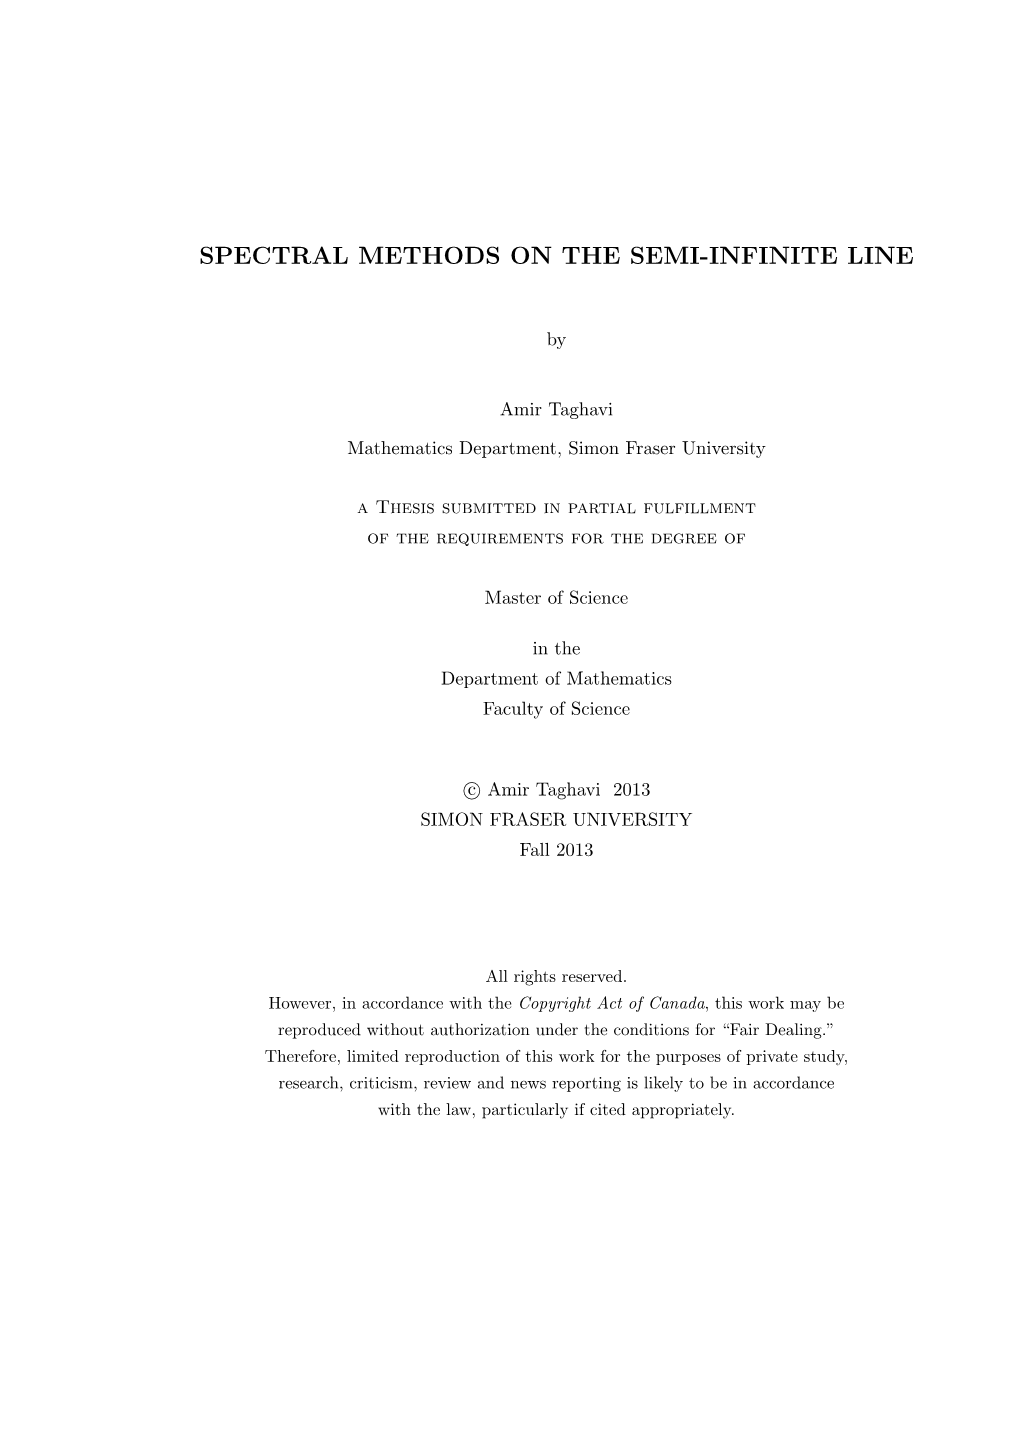 Spectral Methods on the Semi-Infinite Line